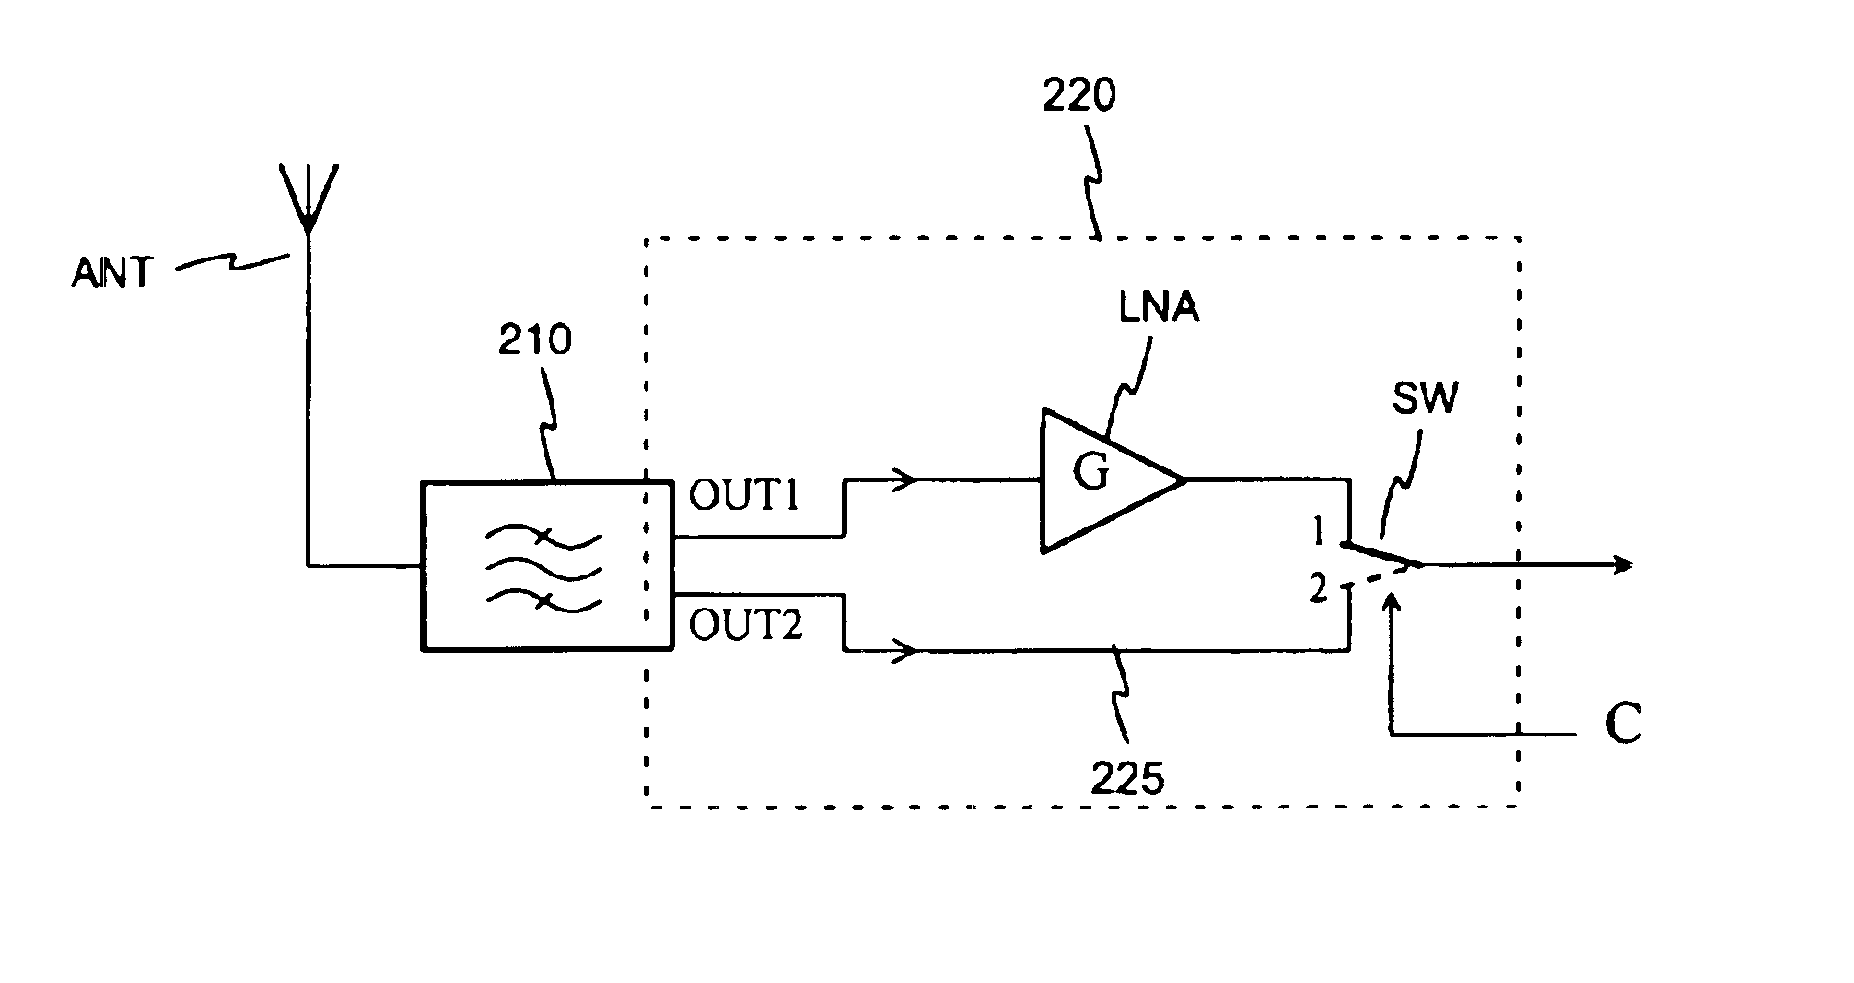 Bypass arrangement for low-noise amplifier